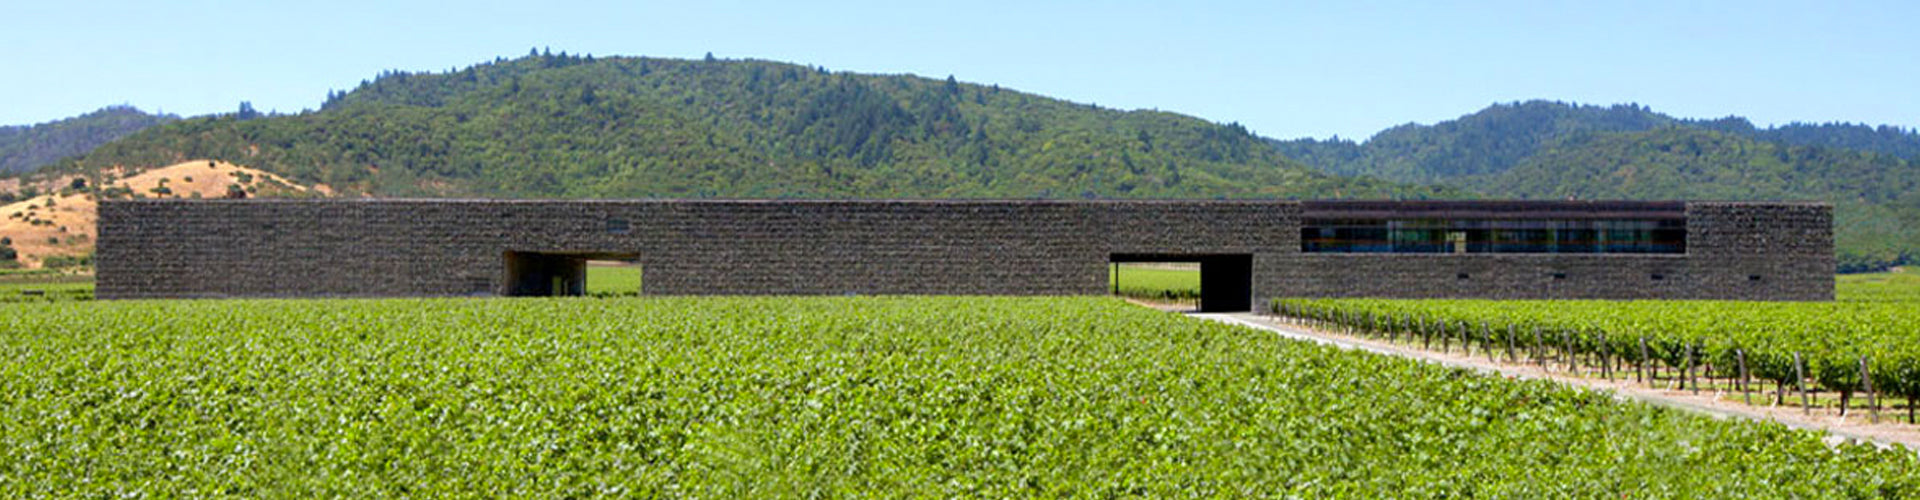 Dominus Estate Winery Napa Valley